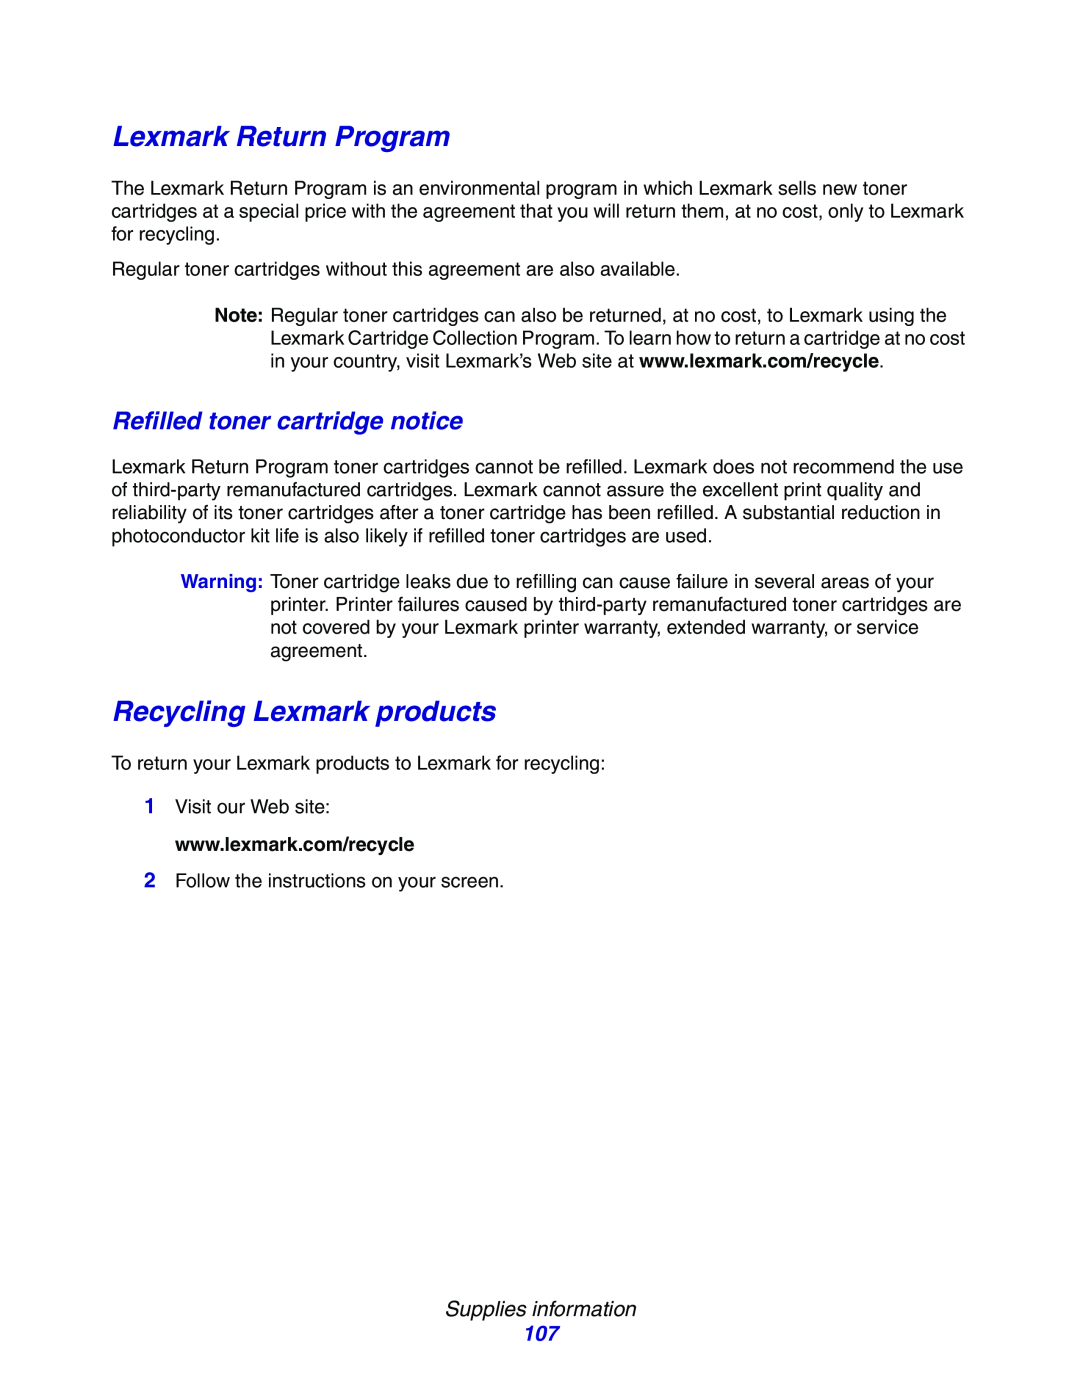 Lexmark E234 Lexmark Return Program, Recycling Lexmark products, Refilled toner cartridge notice, Supplies information 